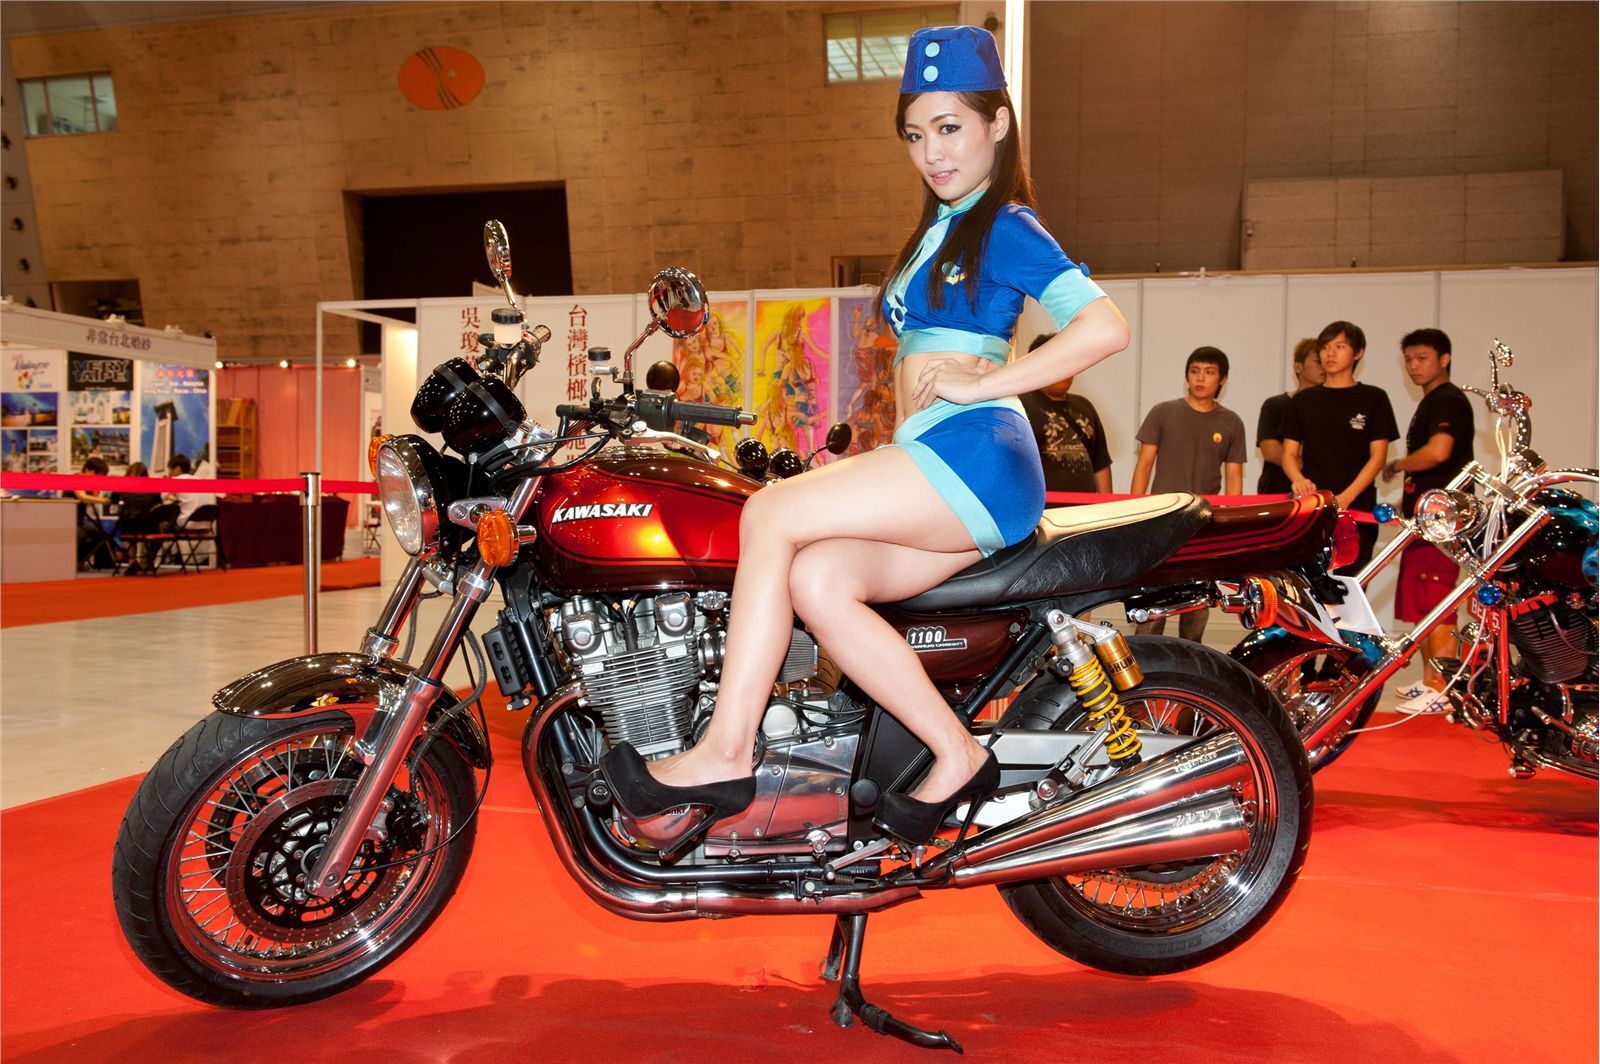 Betel nut Costume Art Exhibition (4): motorcycle photo of Taiwan model